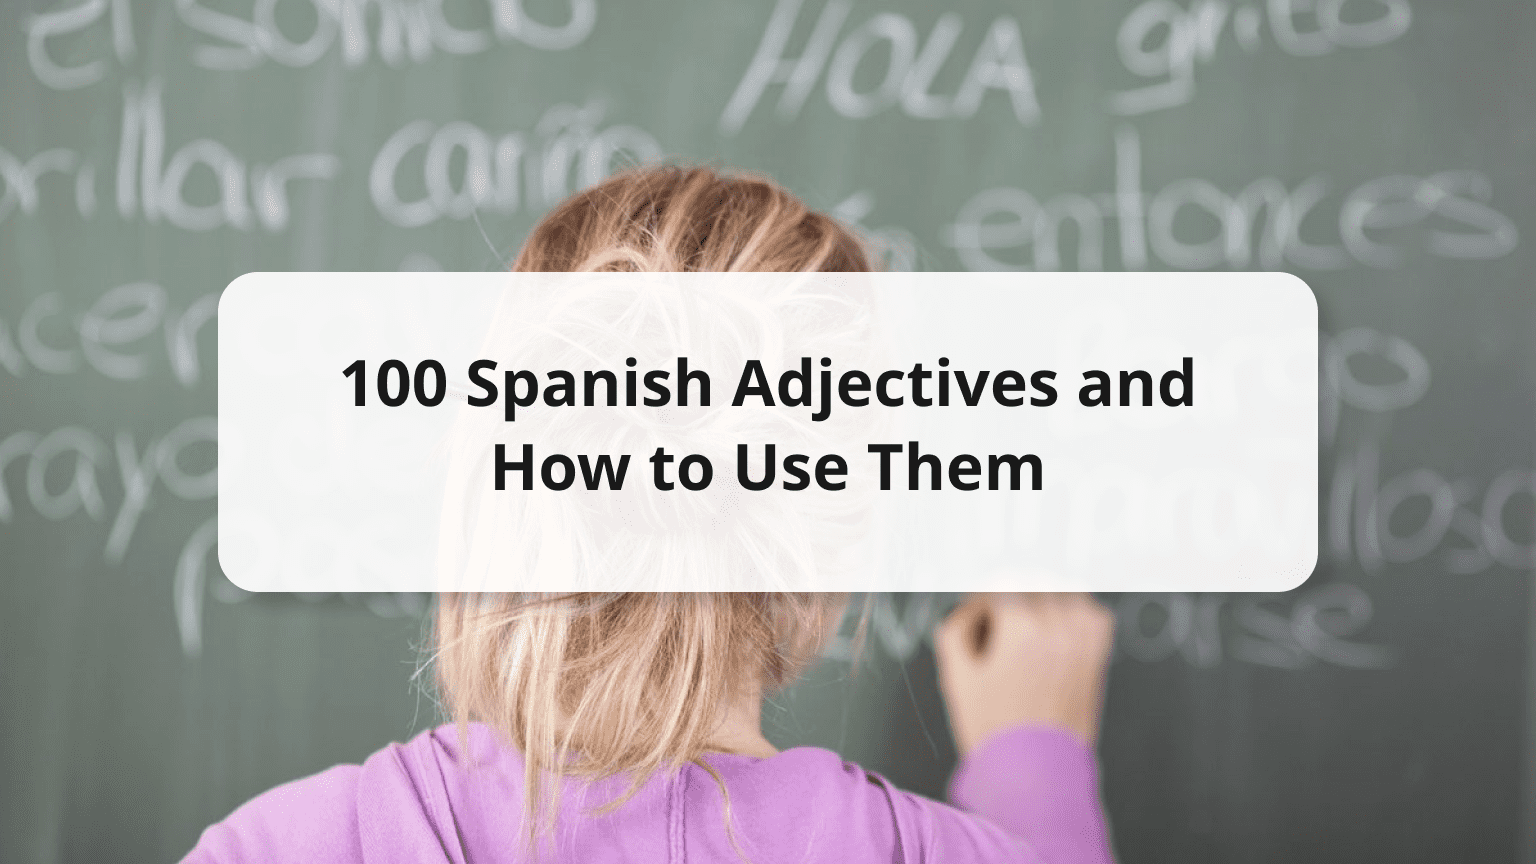 búnker Álgebra Enemistarse 100 Common Spanish Adjectives to Describe People & Things